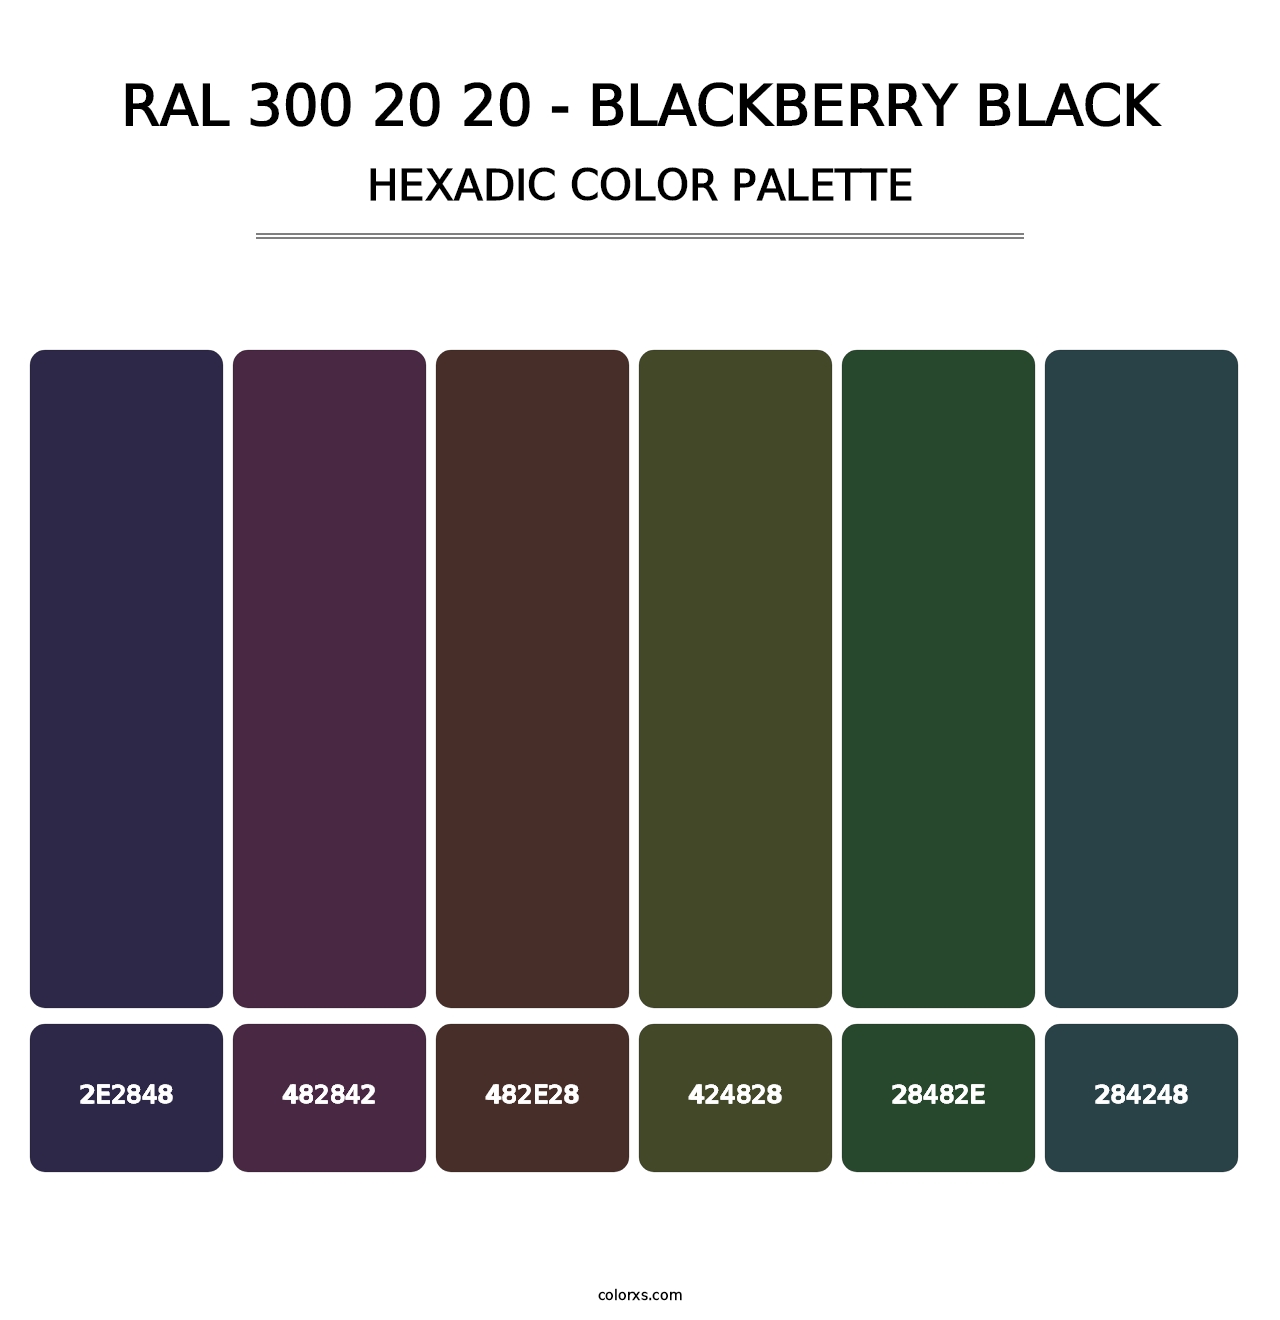 RAL 300 20 20 - Blackberry Black - Hexadic Color Palette